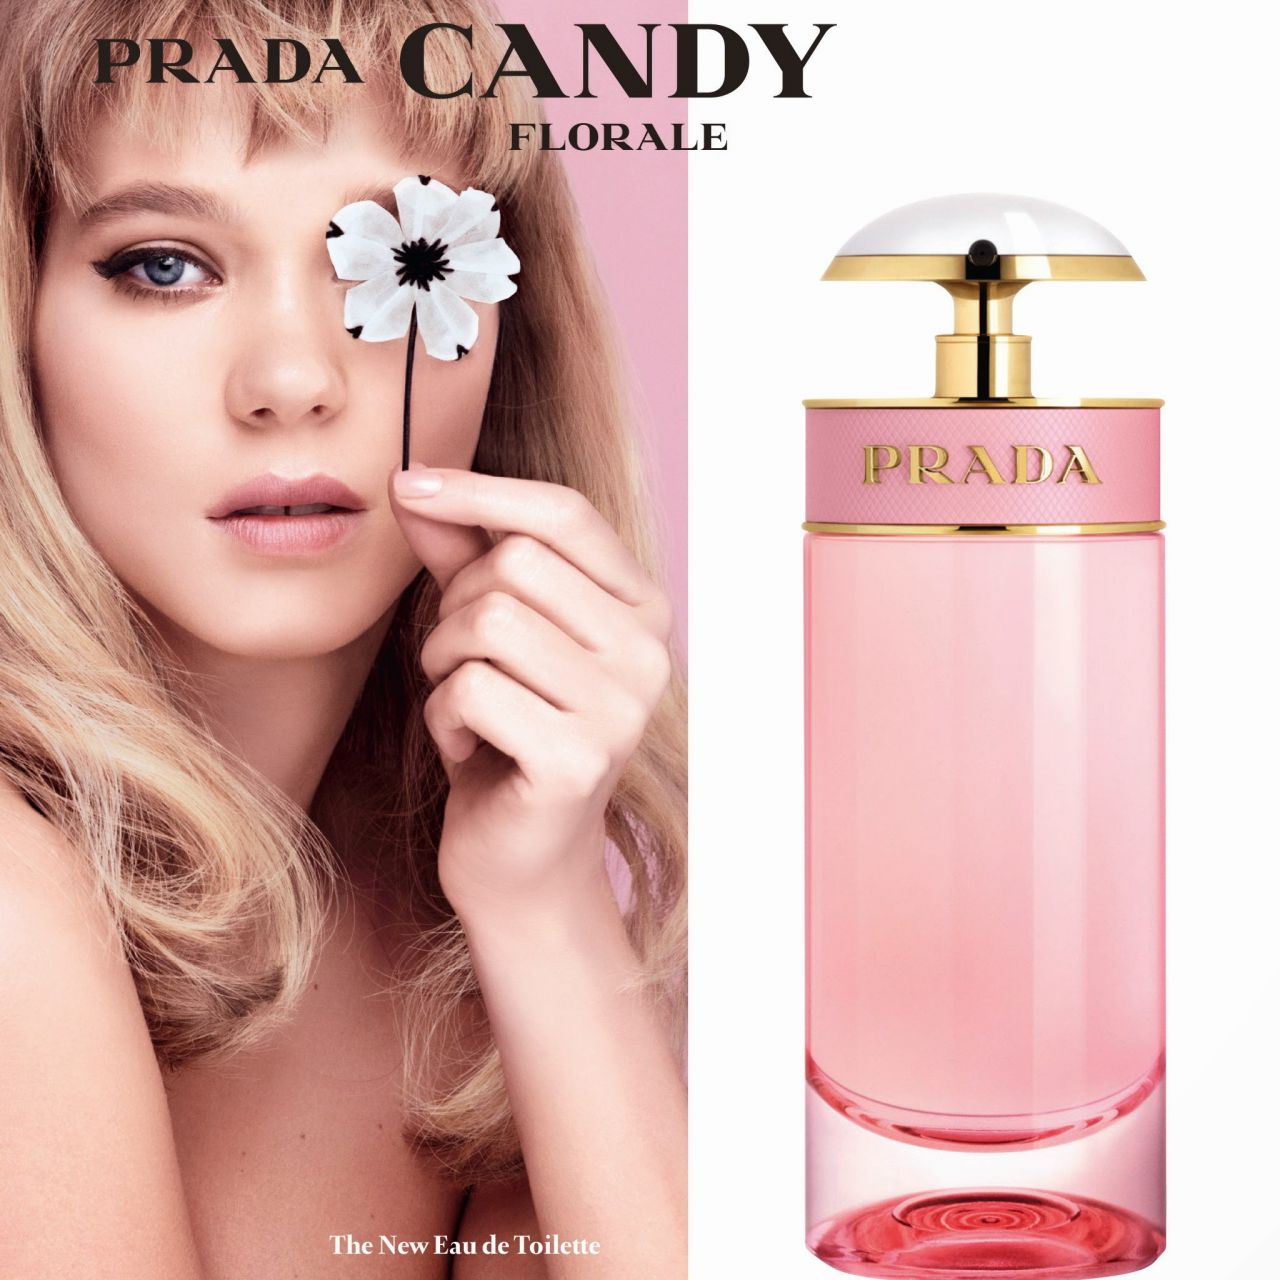 Prada Candy parfum commercial - Léa Seydoux 